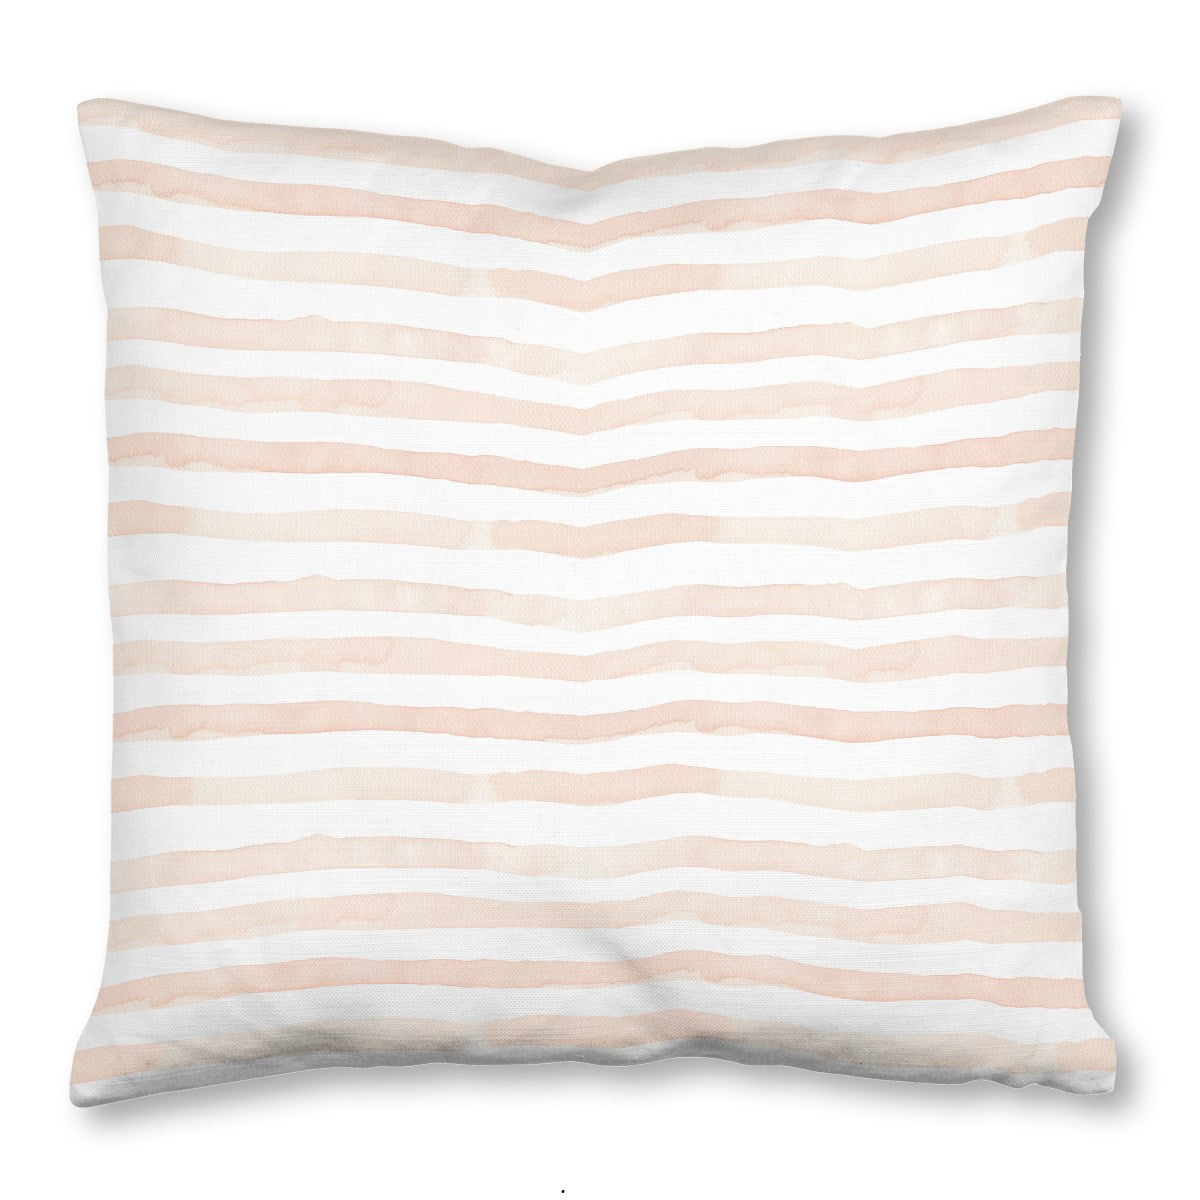 Pink Stripe Throw Pillow